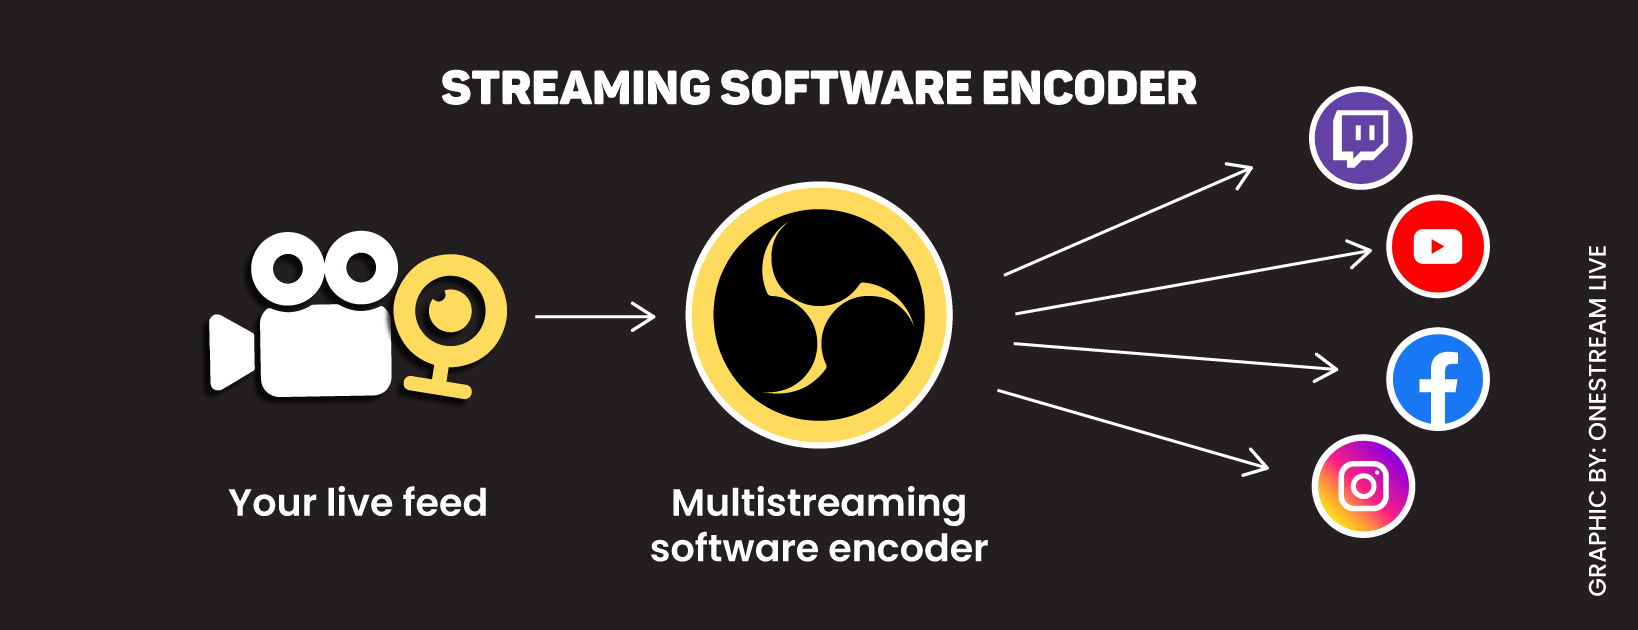 Multistreaming software encoder